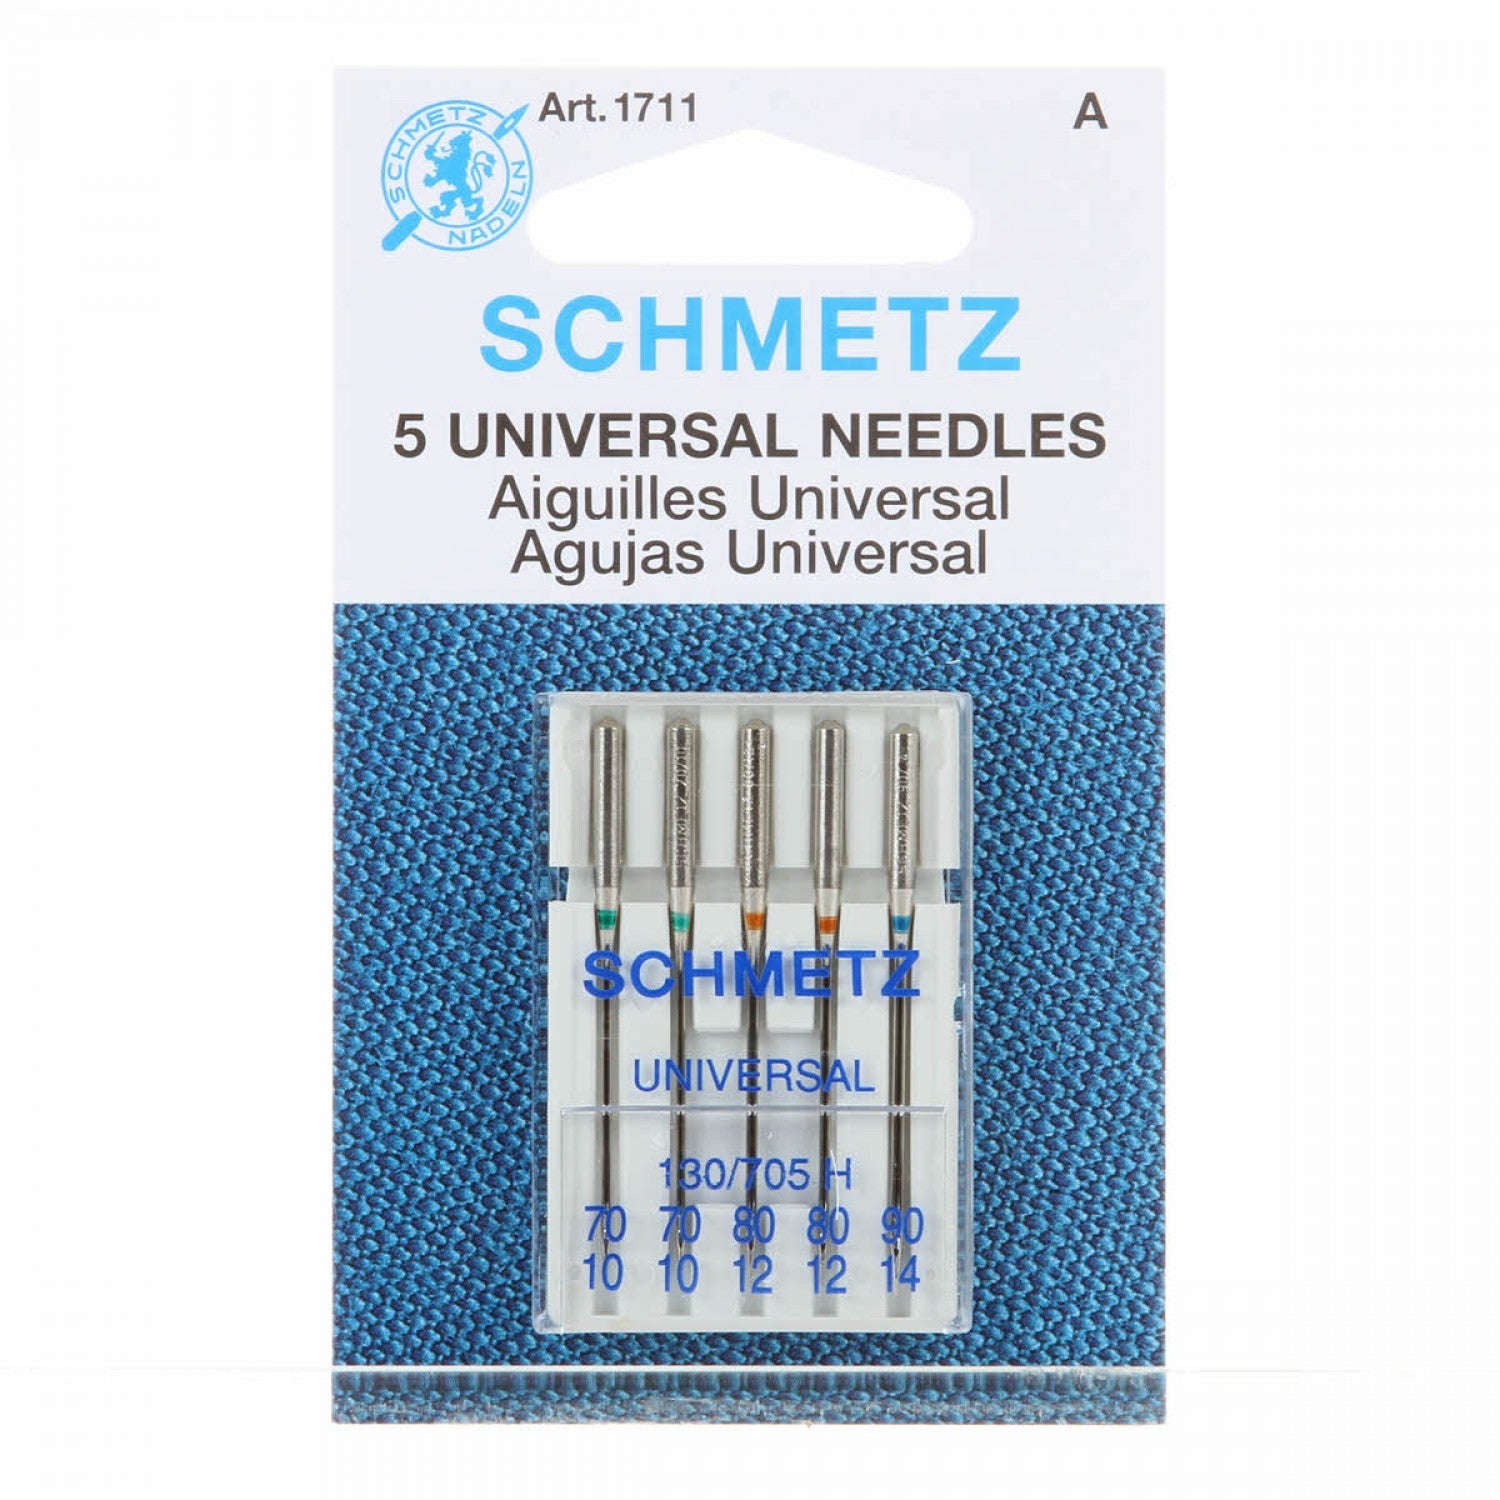 Schmetz Universal Needle - Assorted - 1 Package of 5 Needles